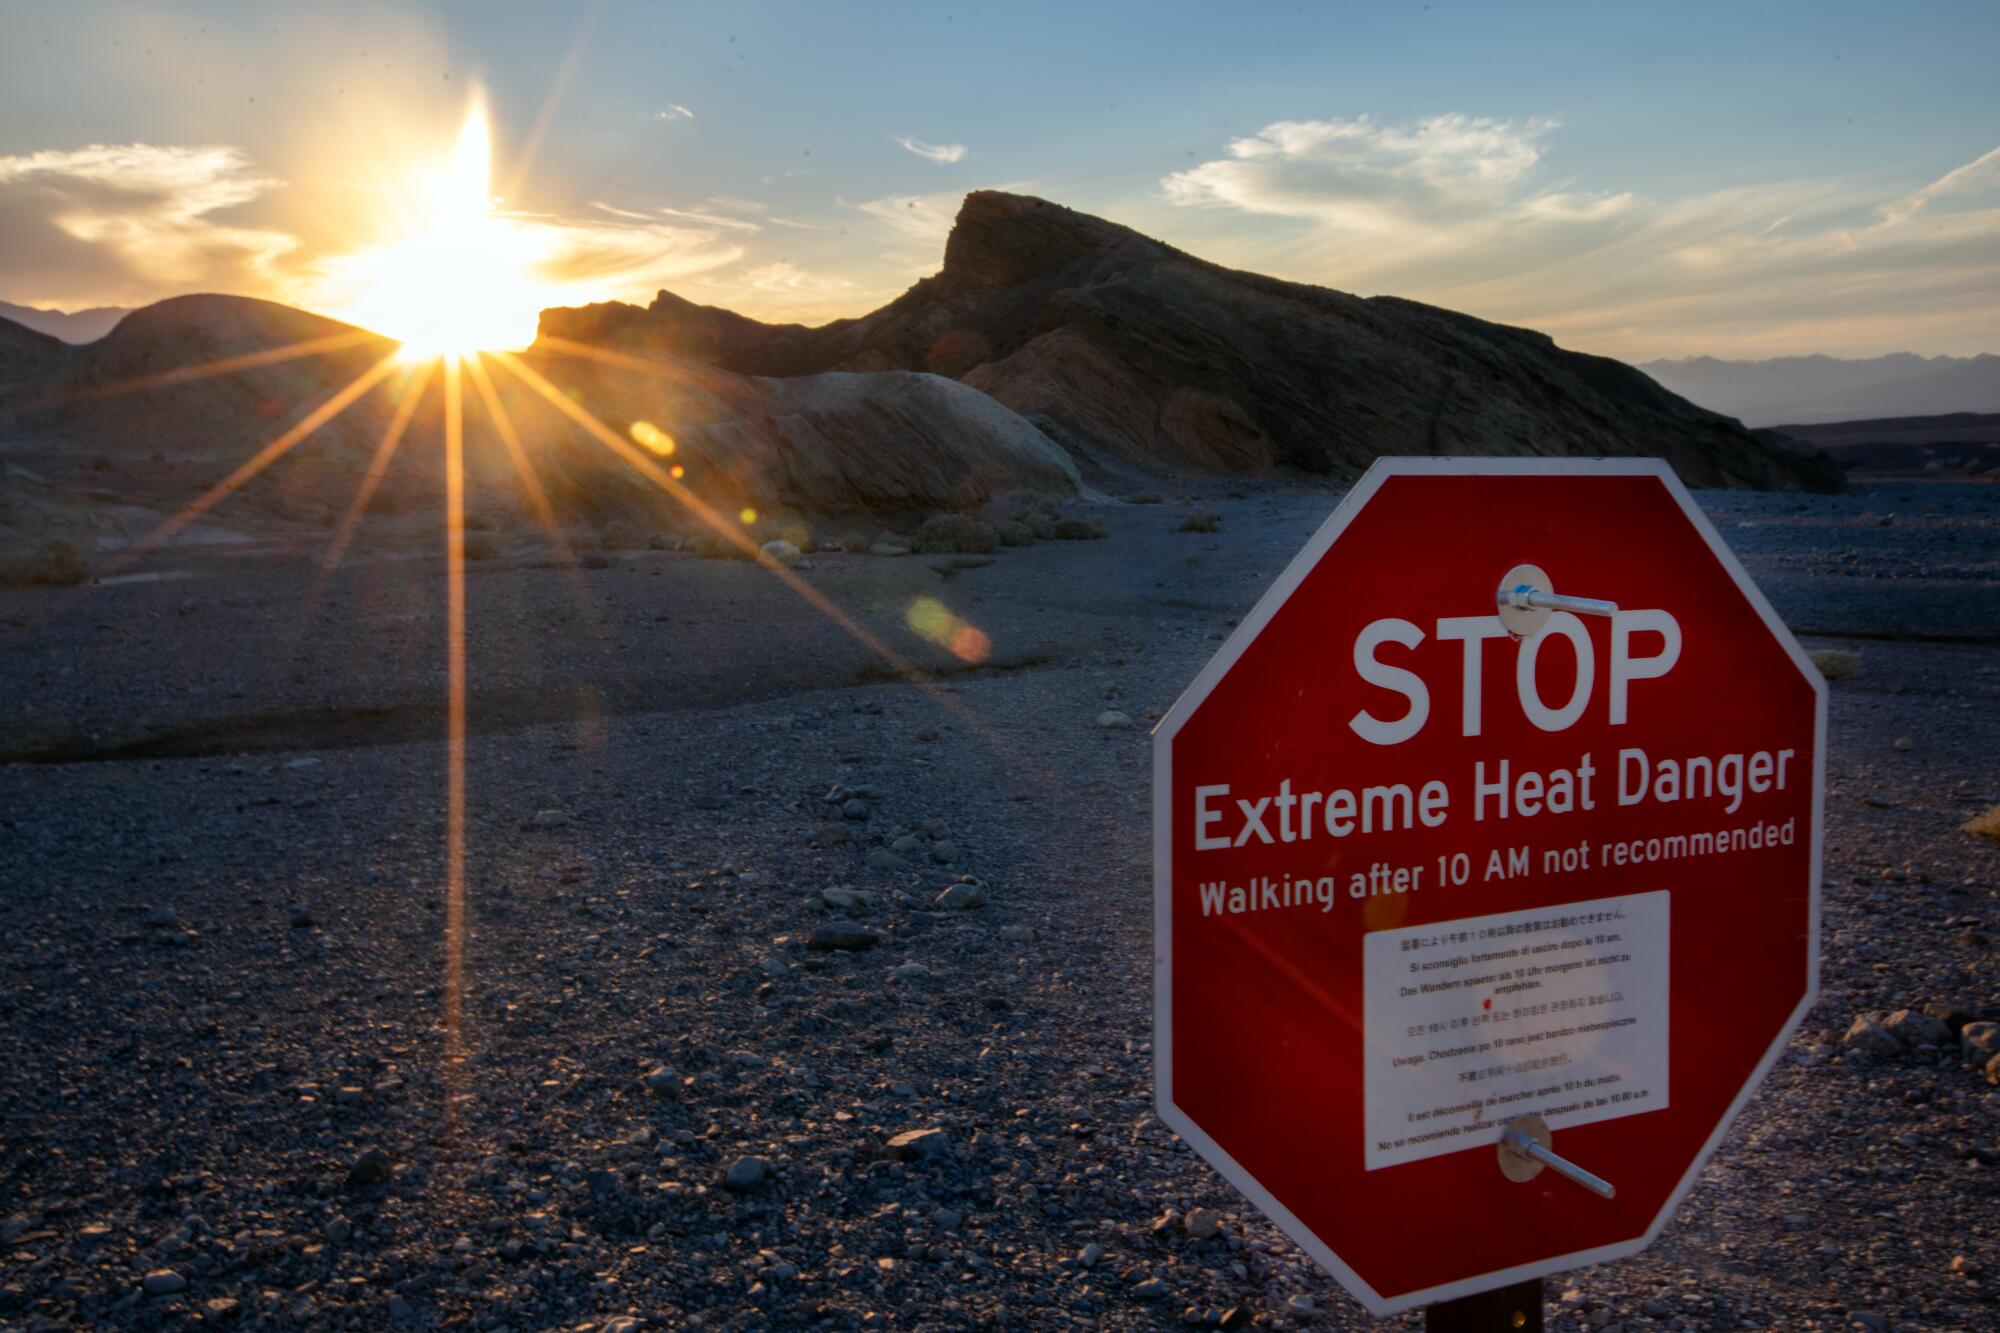 A sign warns of extreme heat danger at Zabriskie Point in Death Valley.